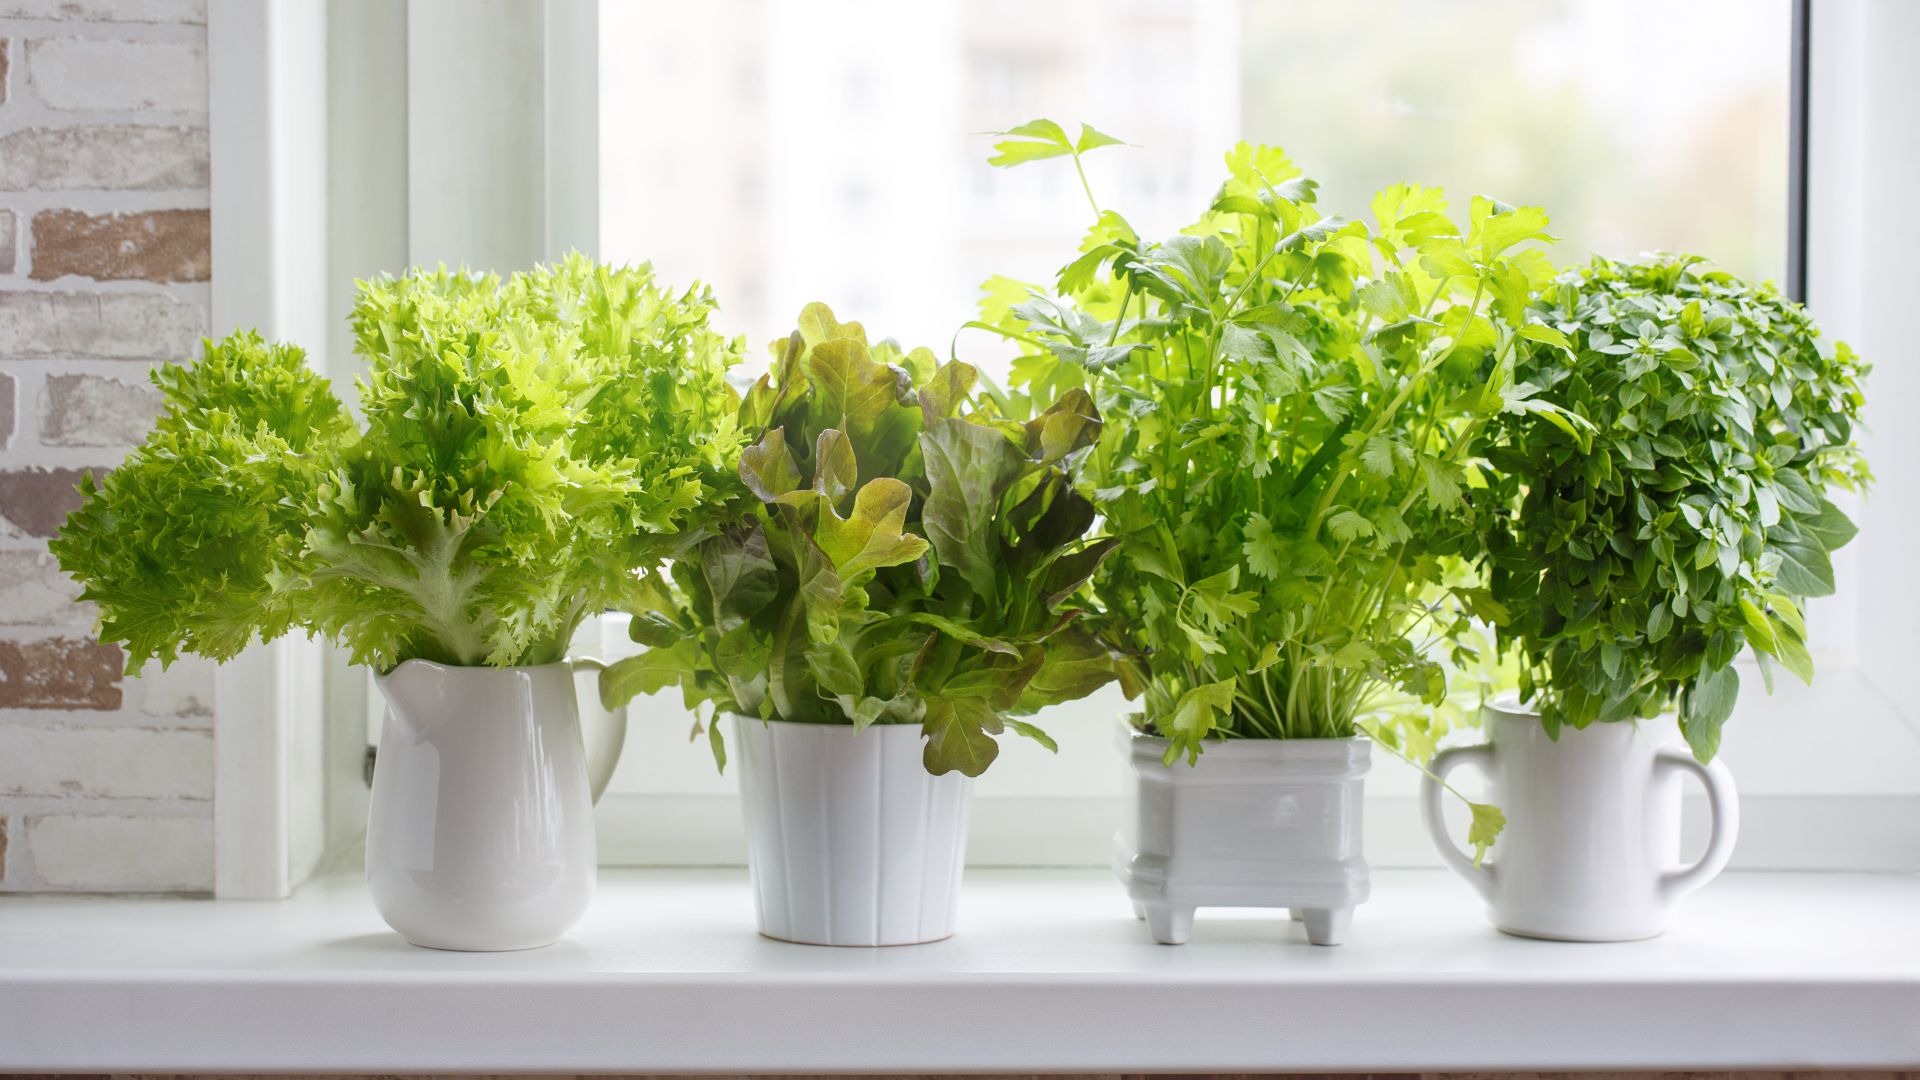 How to grow a herb garden